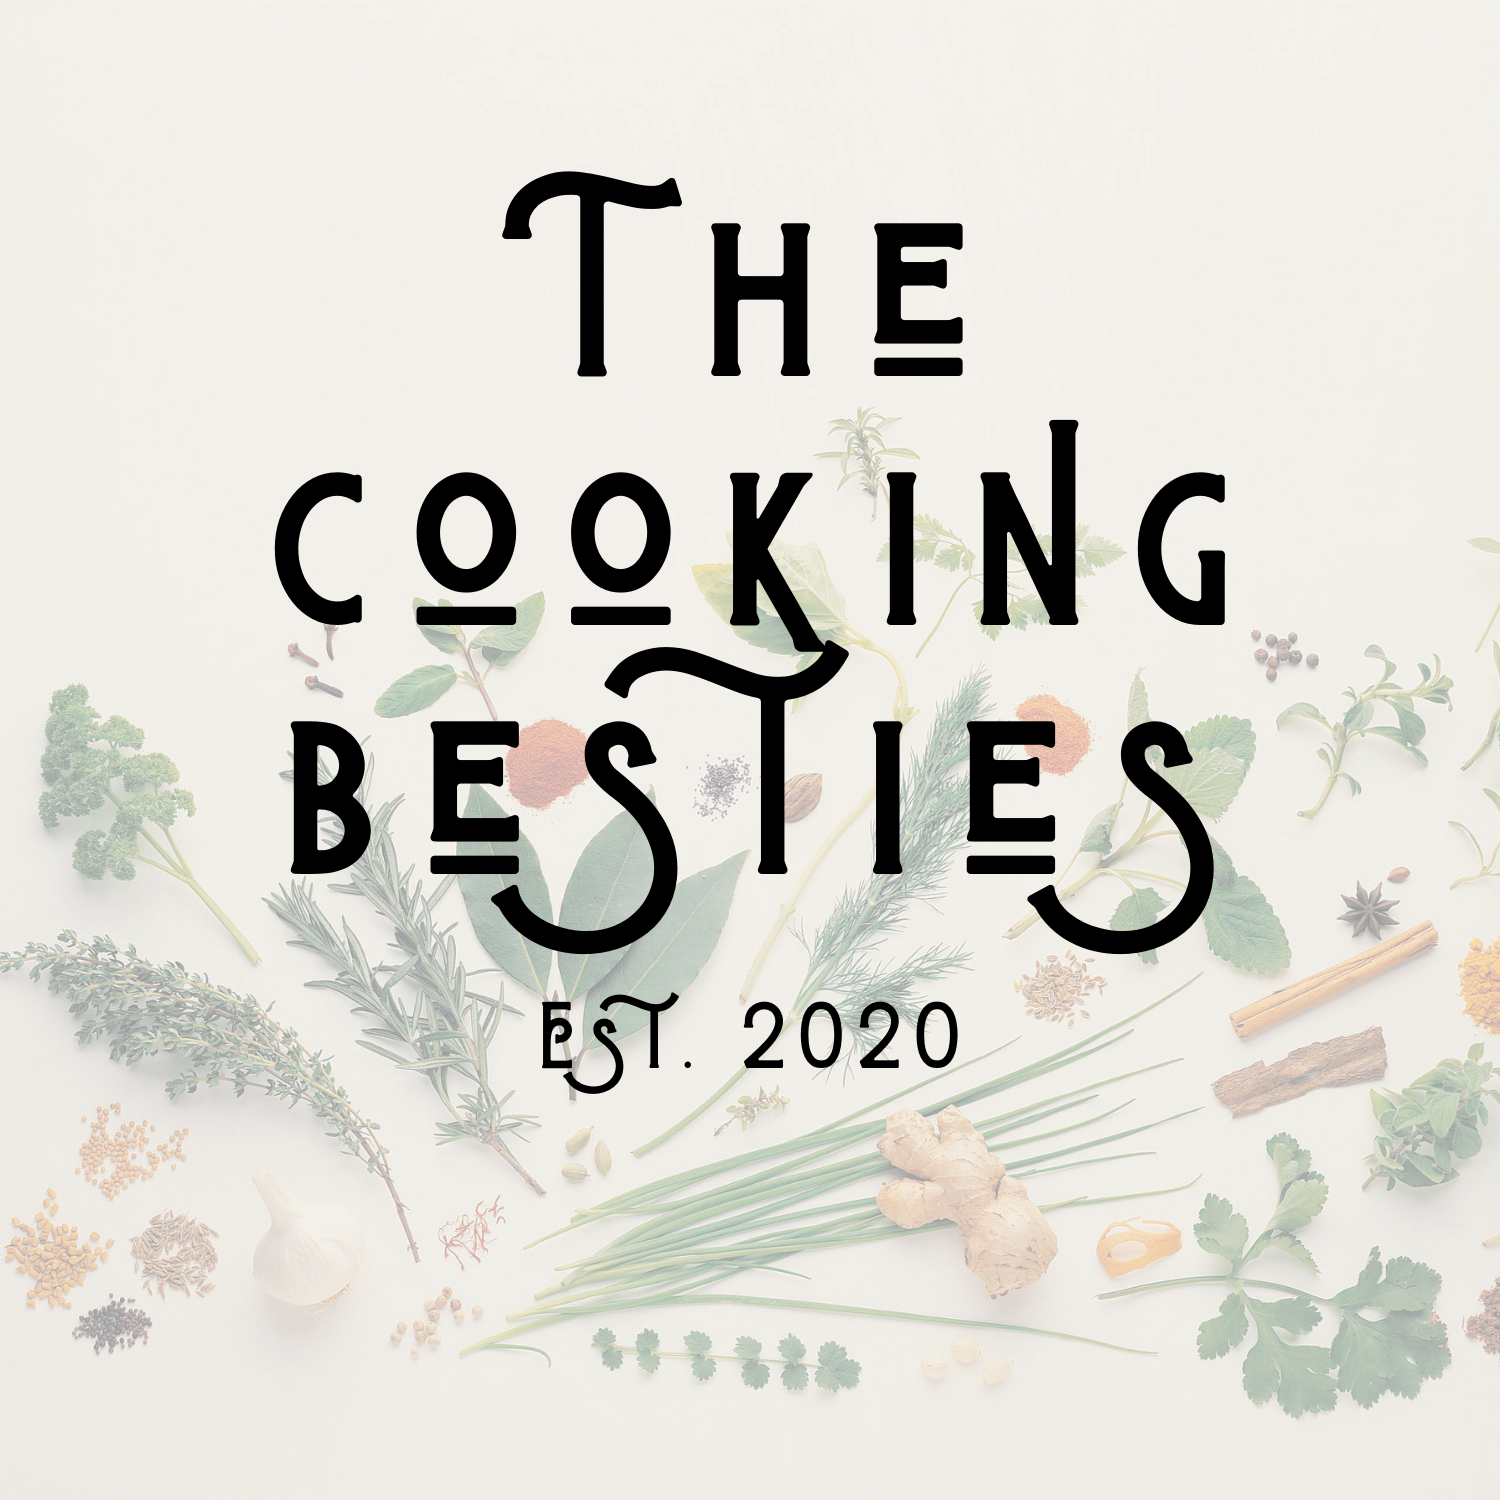 The Cooking Besties food truck profile image